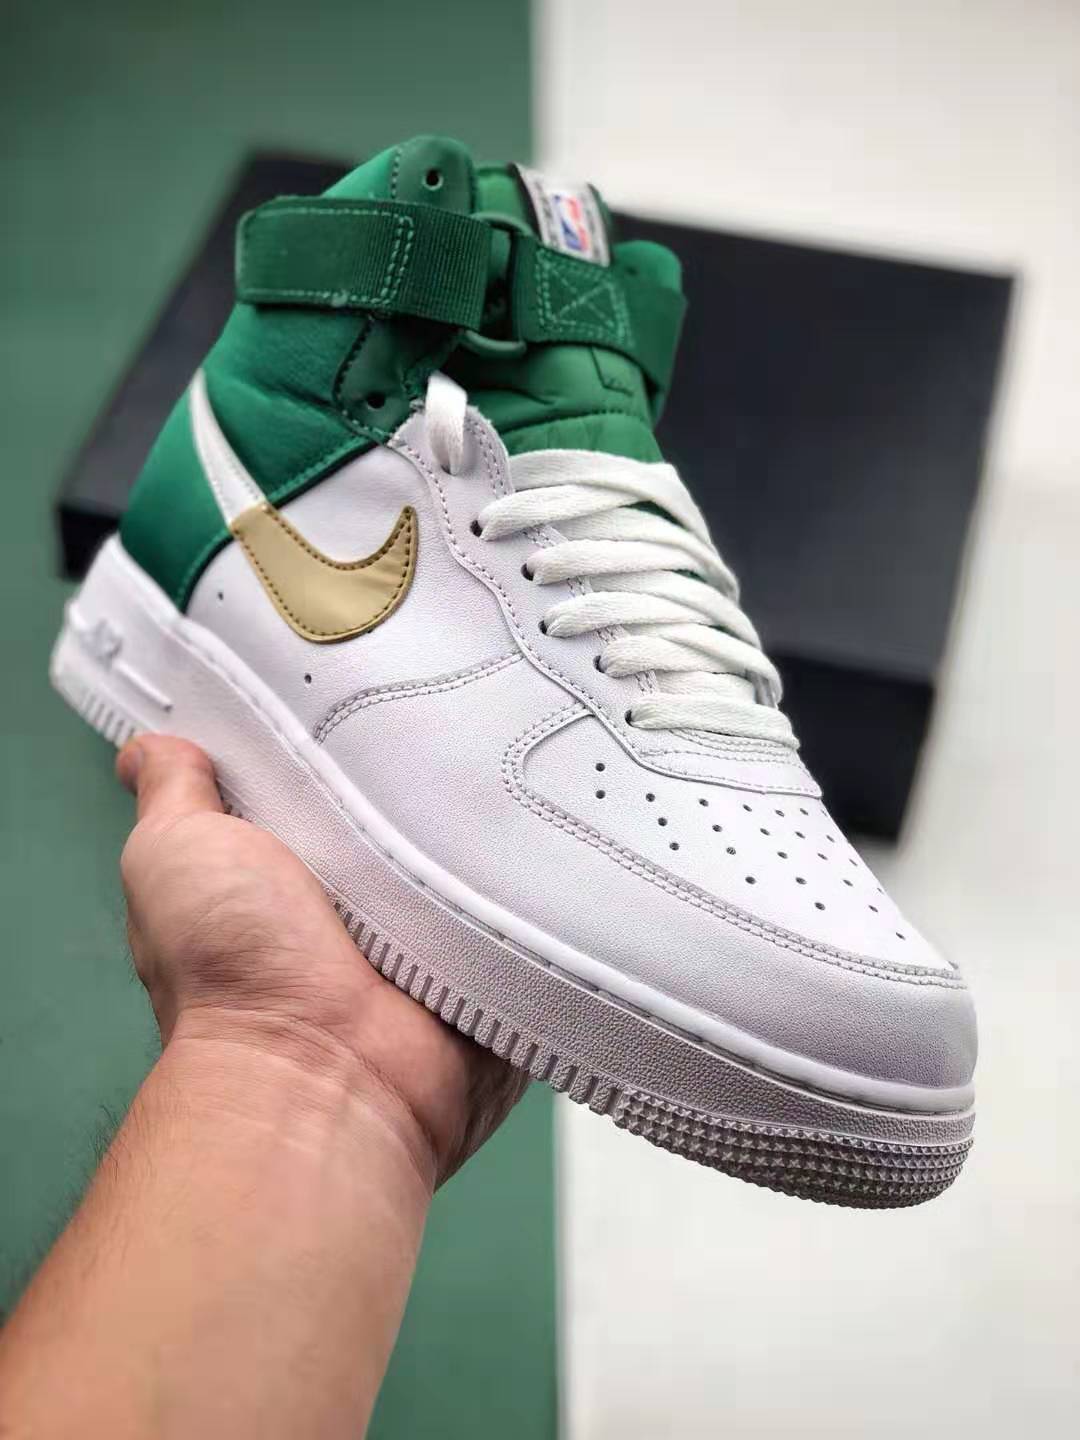 Nike NBA x Air Force 1 High Celtics White Green Gold BQ4591-100 | Exclusive Basketball Sneakers